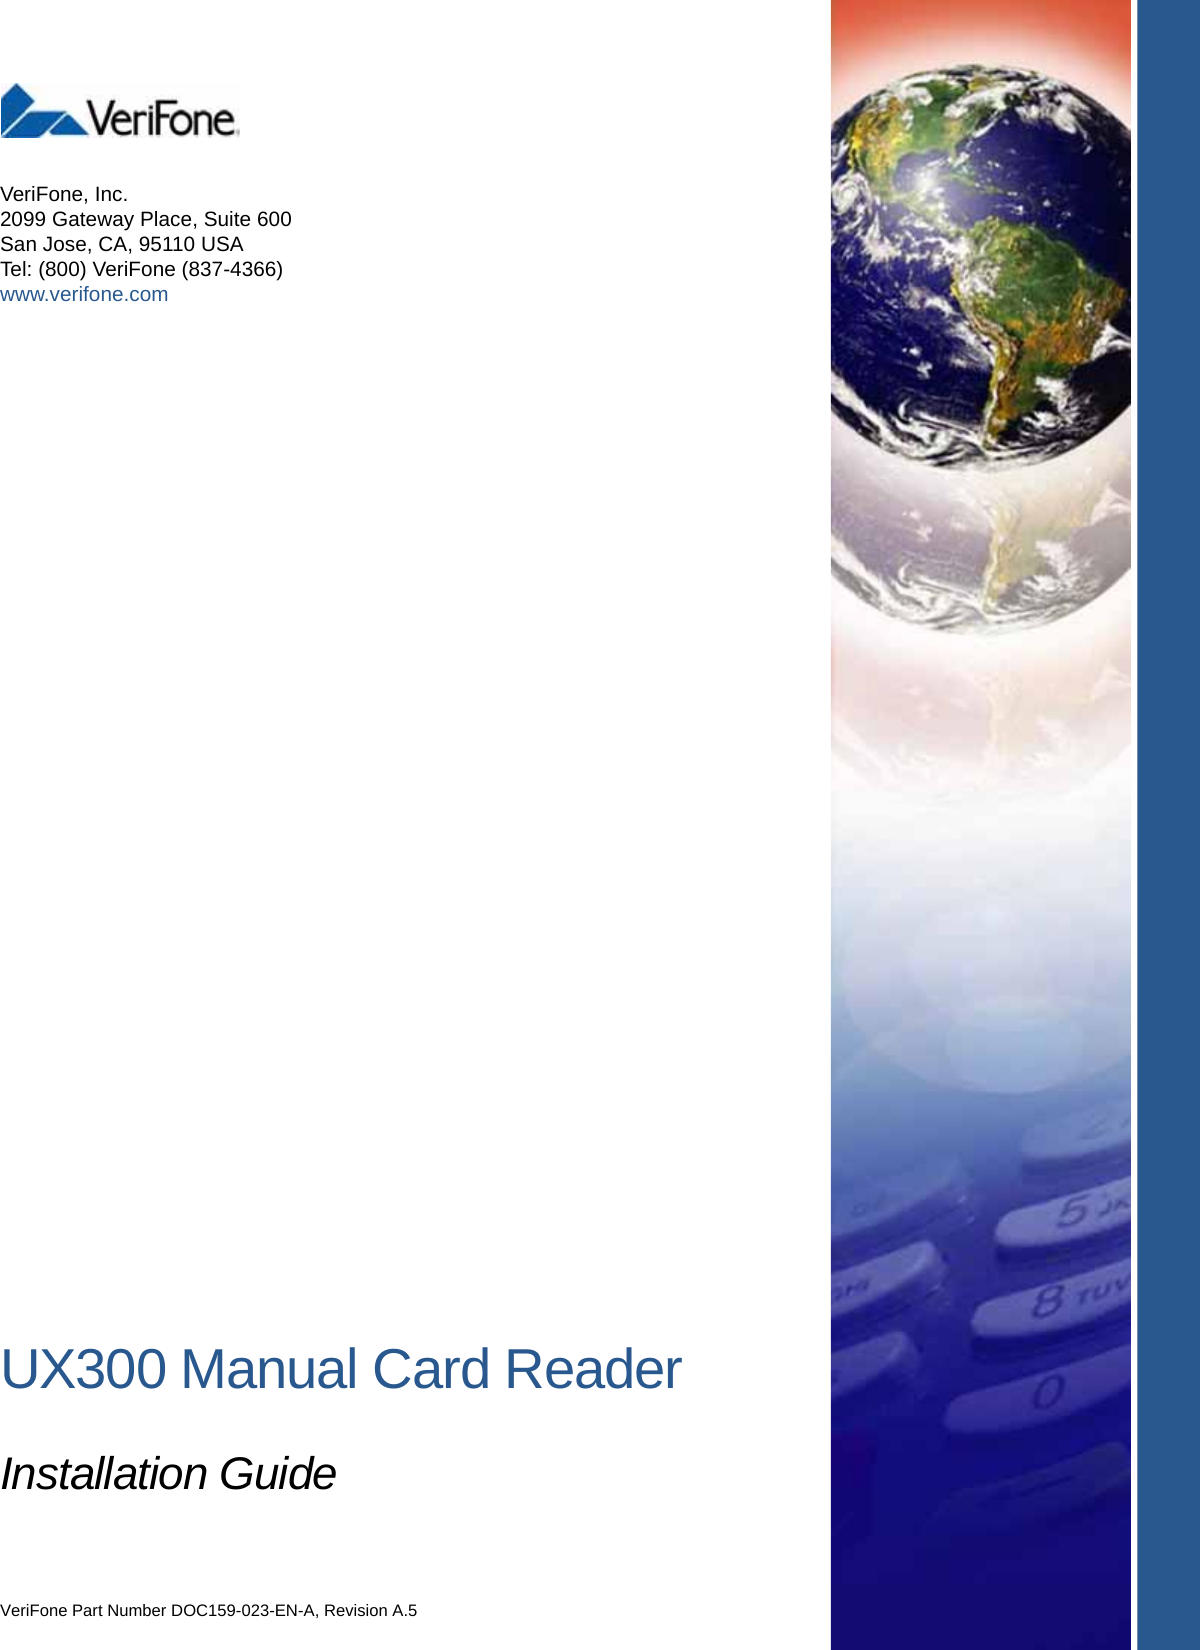 UX300 Manual Card ReaderInstallation GuideVeriFone Part Number DOC159-023-EN-A, Revision A.5VeriFone, Inc.2099 Gateway Place, Suite 600San Jose, CA, 95110 USATel: (800) VeriFone (837-4366)www.verifone.com